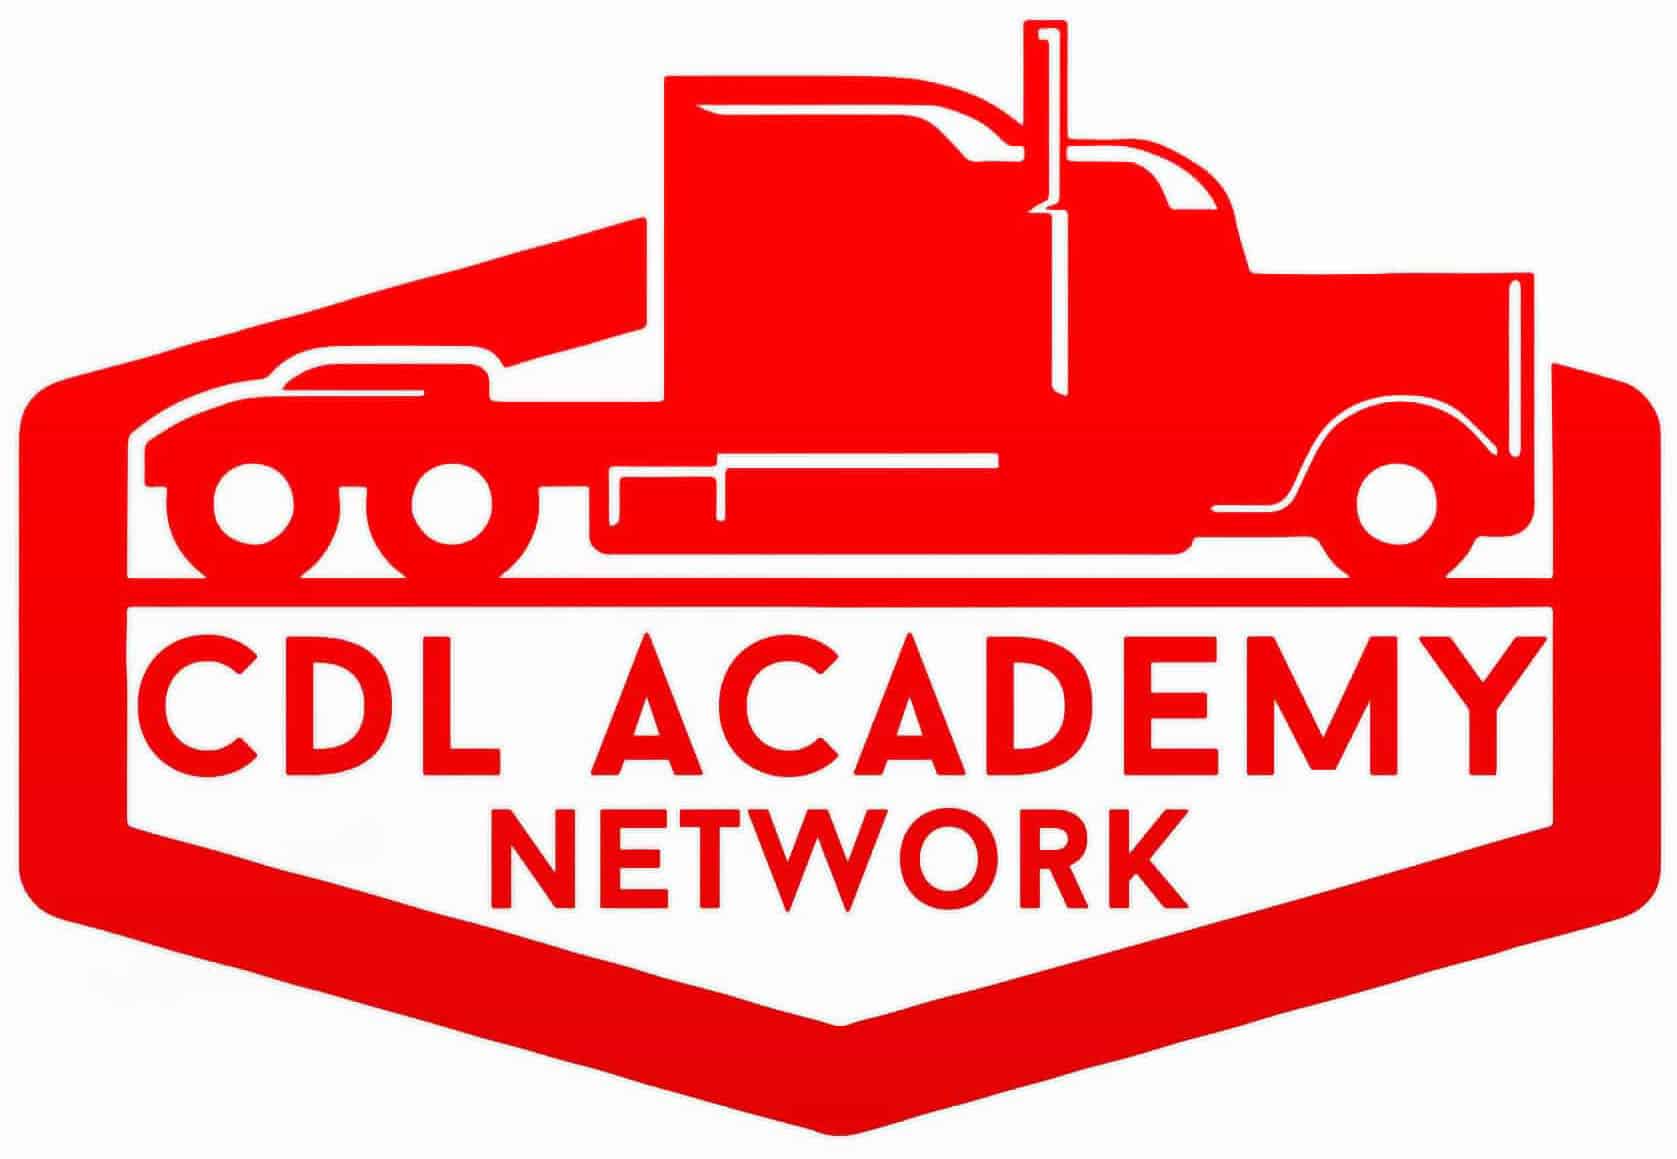 Red de Academias CDL